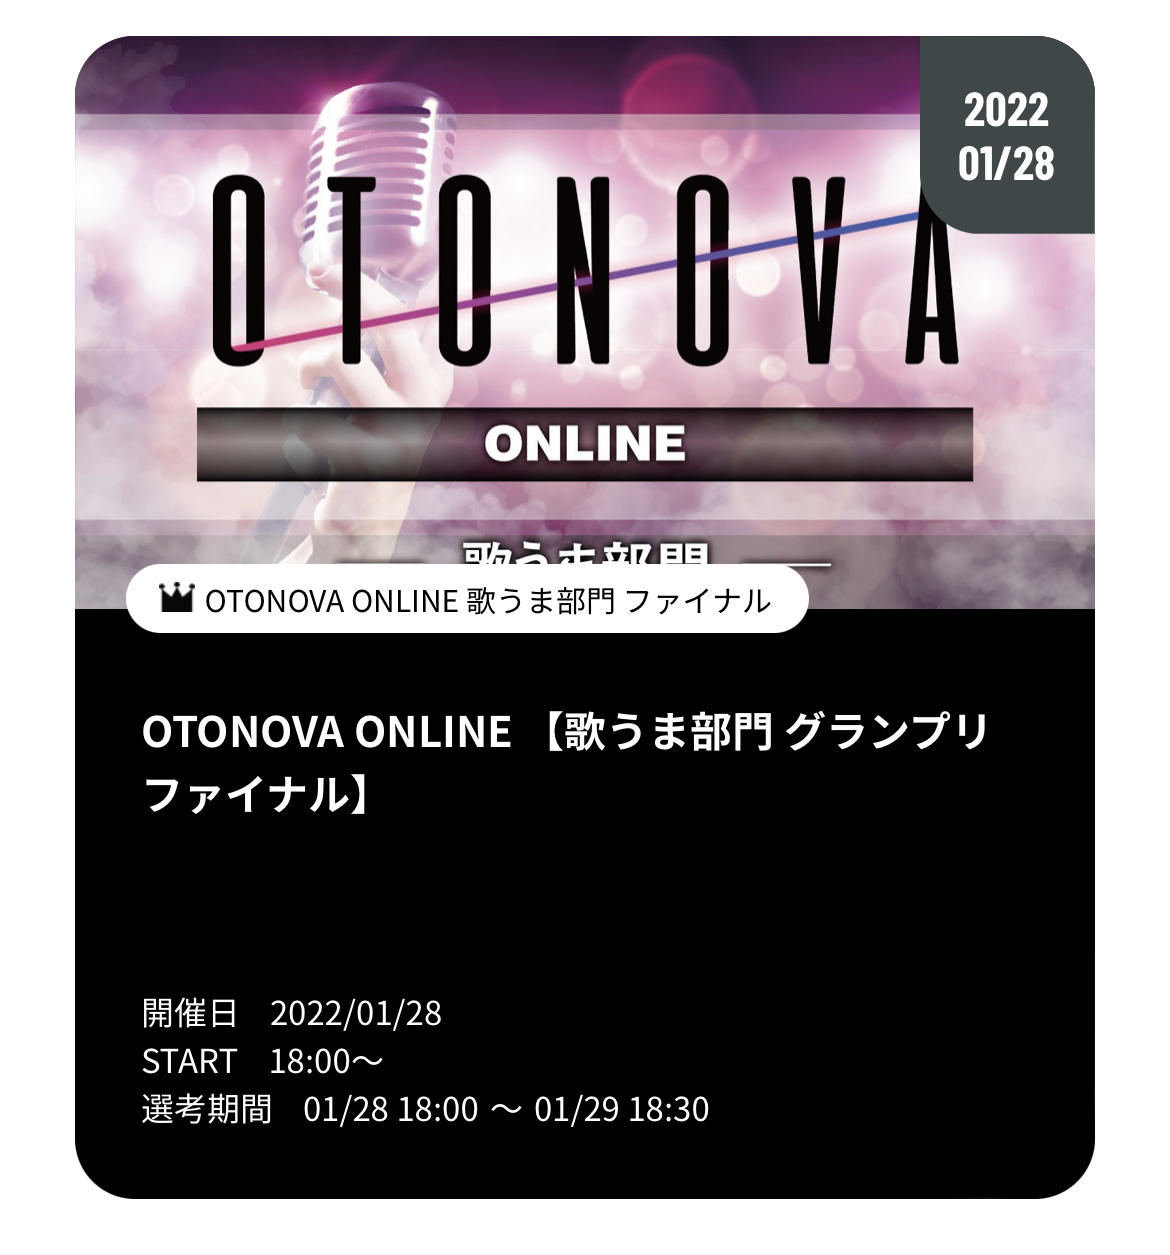 OTONOVA ONLINE 【歌うま部門グランプリファイナル】出演